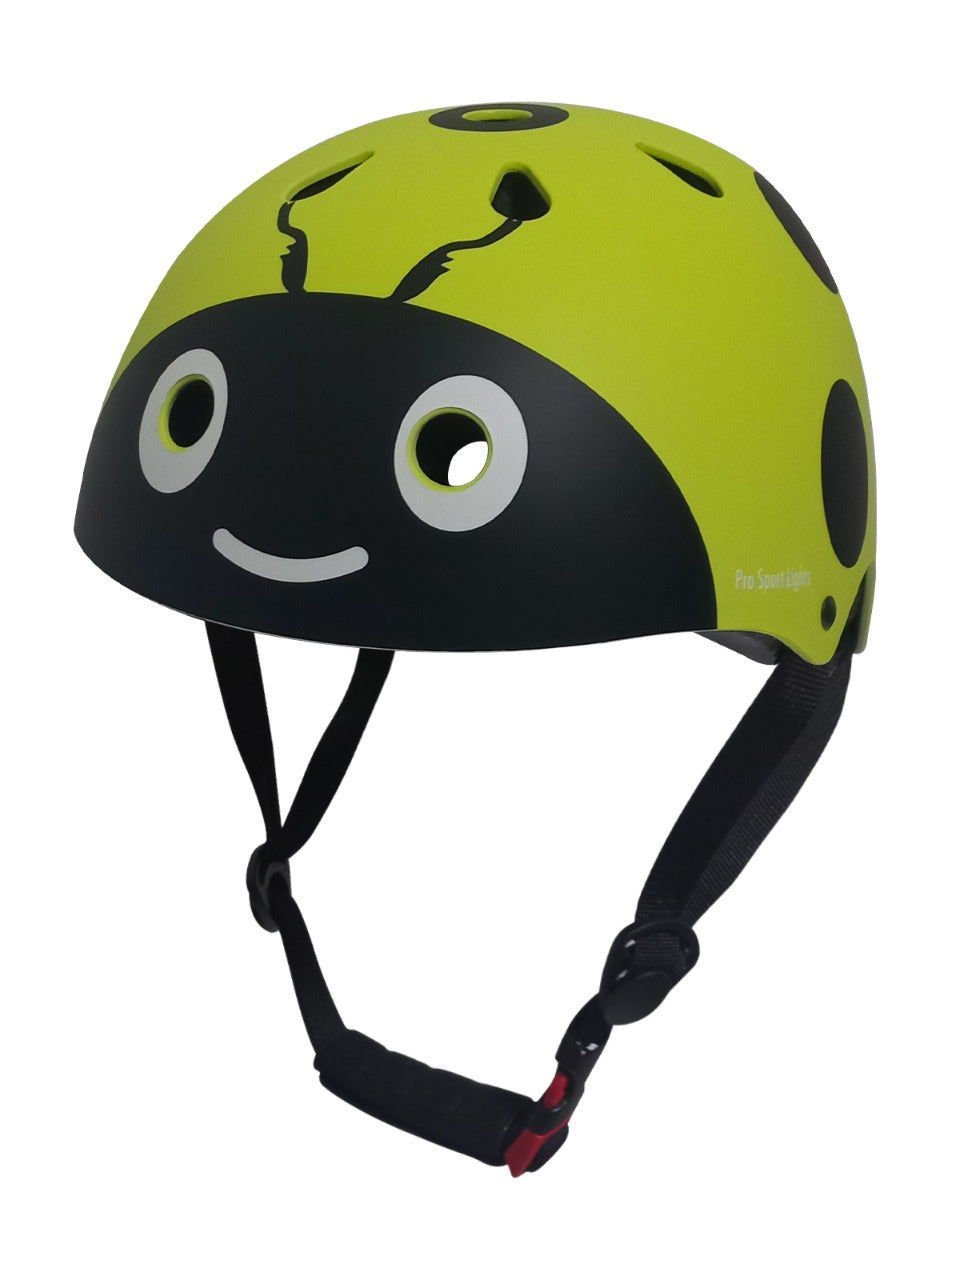 Children's bicycle helmet Pro Sport Lights - Yellow - Small